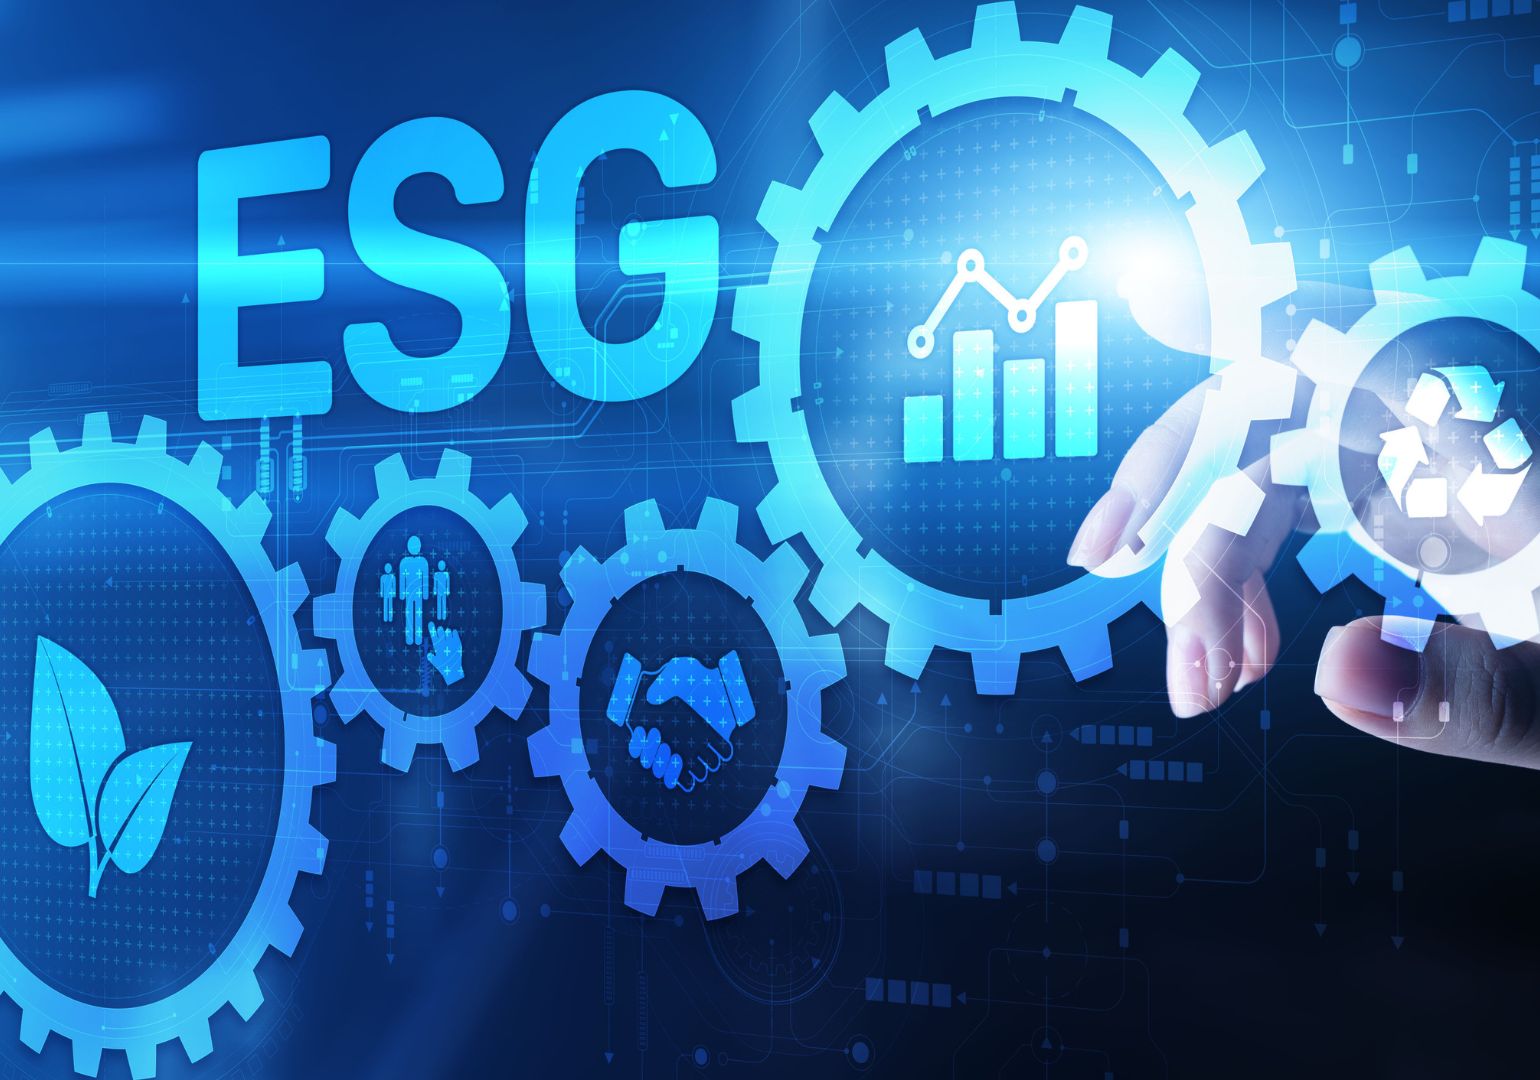 Practical ESG Aspects for Georgia